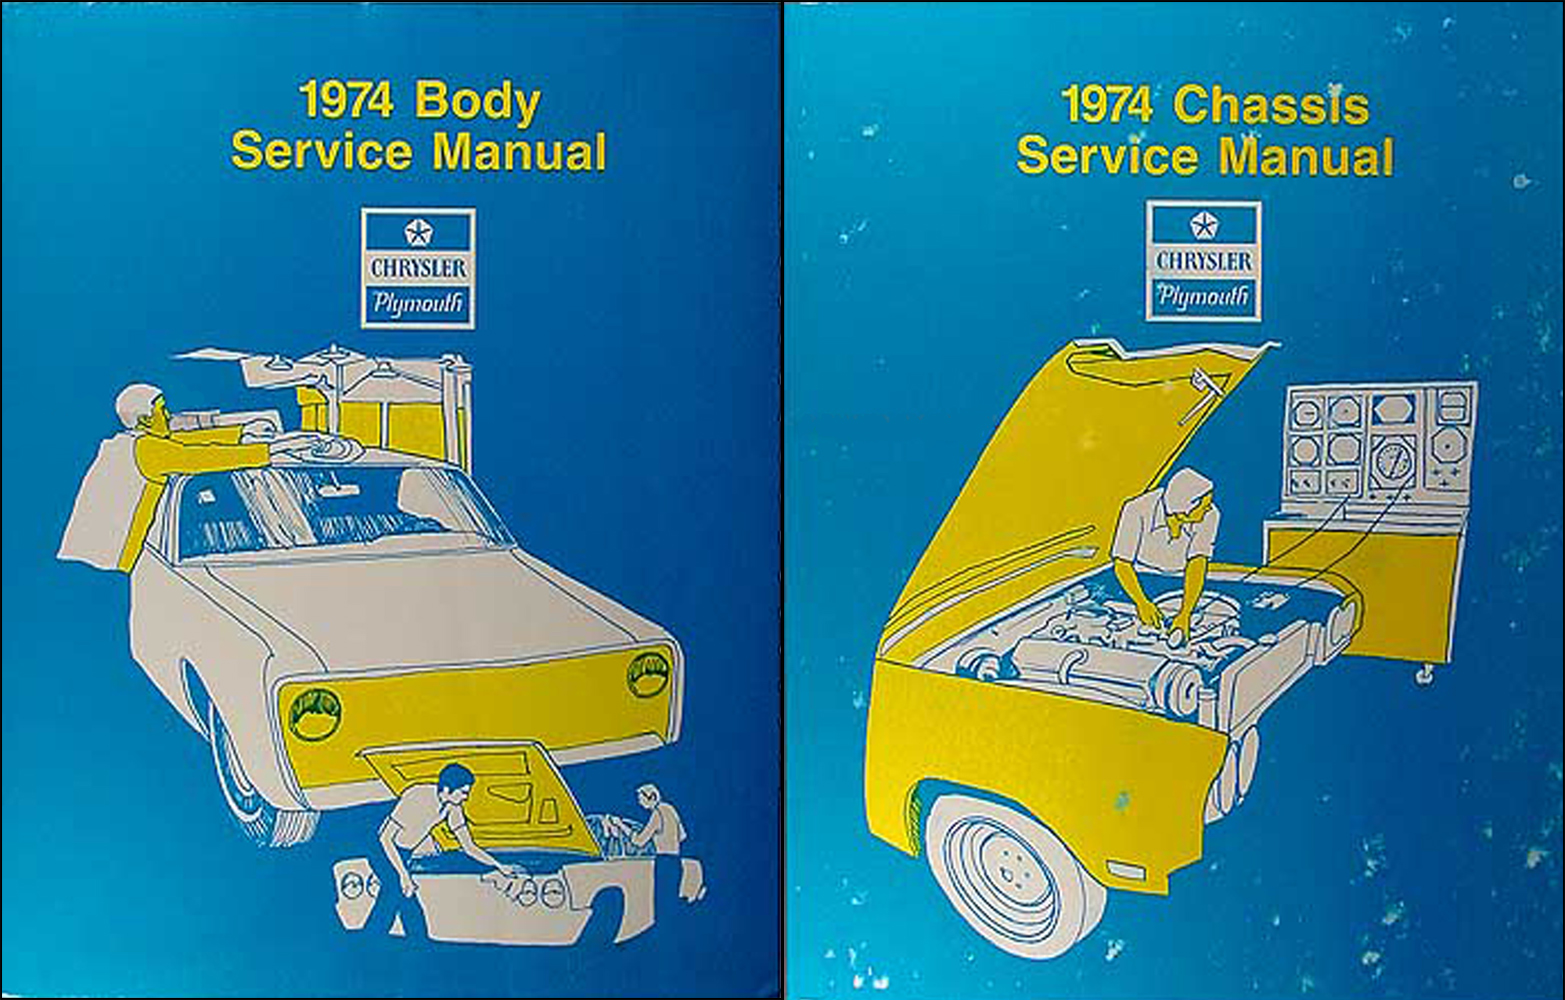 1974 Plymouth and Chrysler Service Manual Original Set